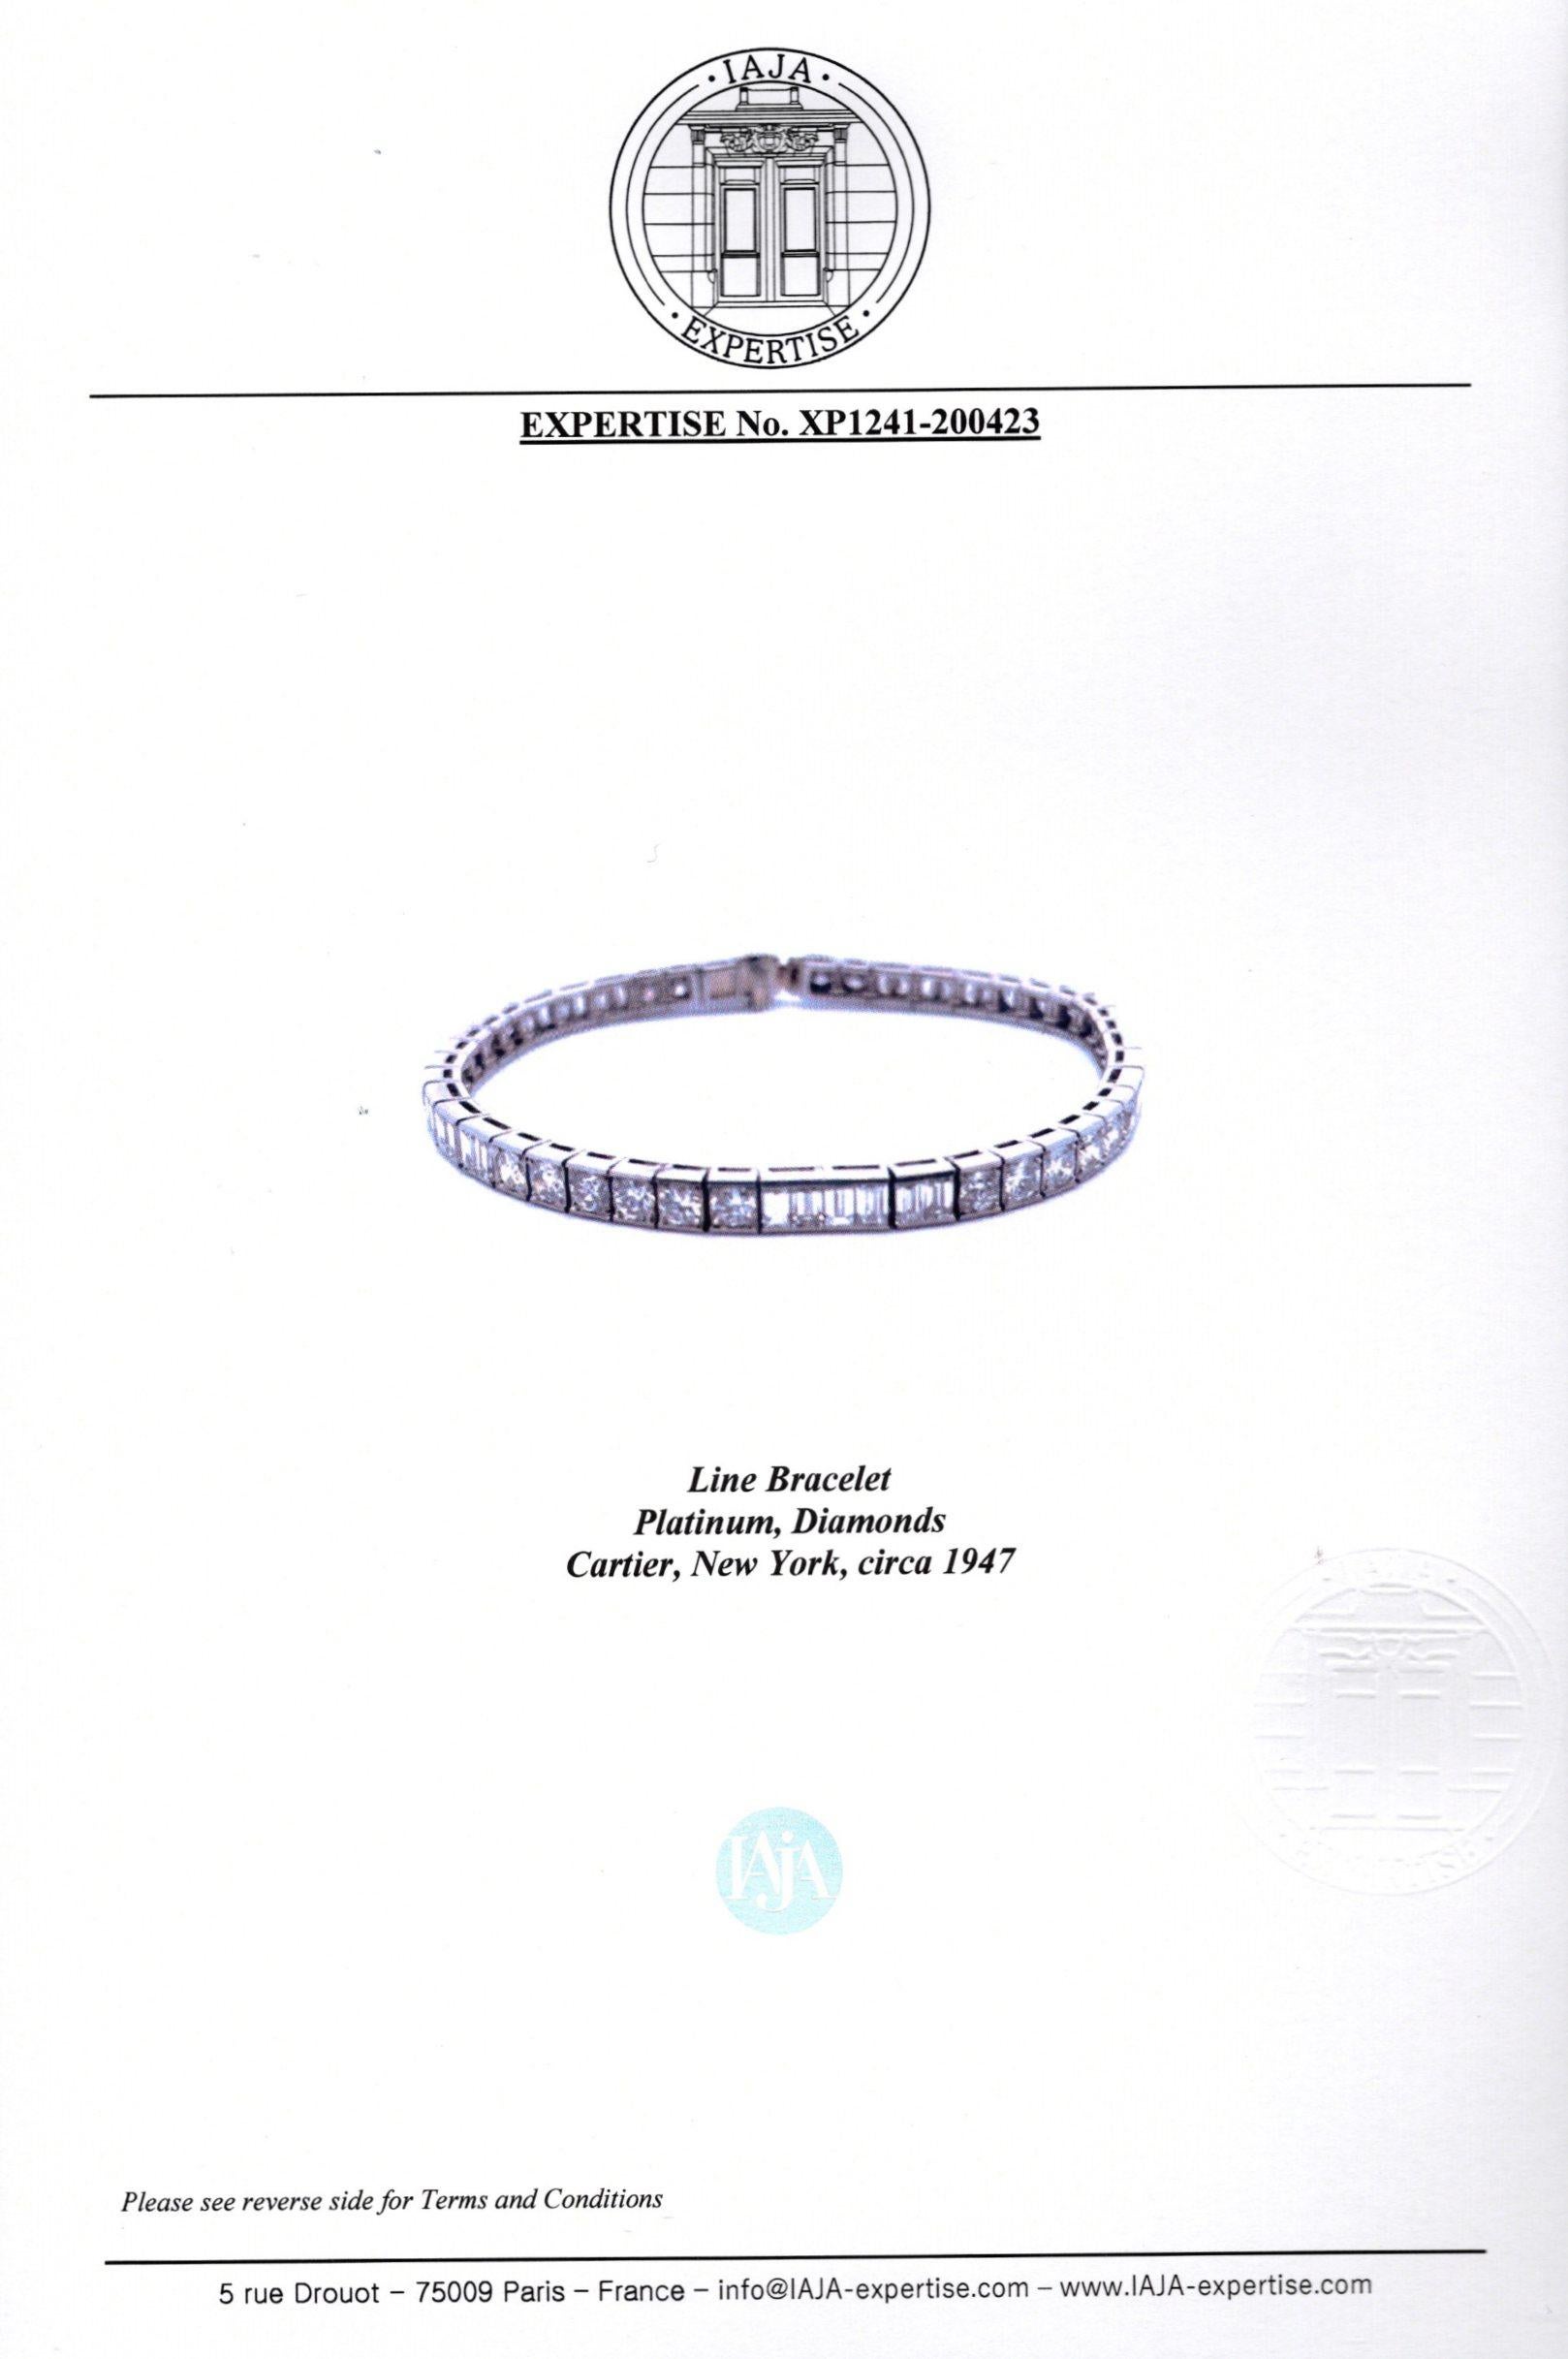 19750 cartier bracelet